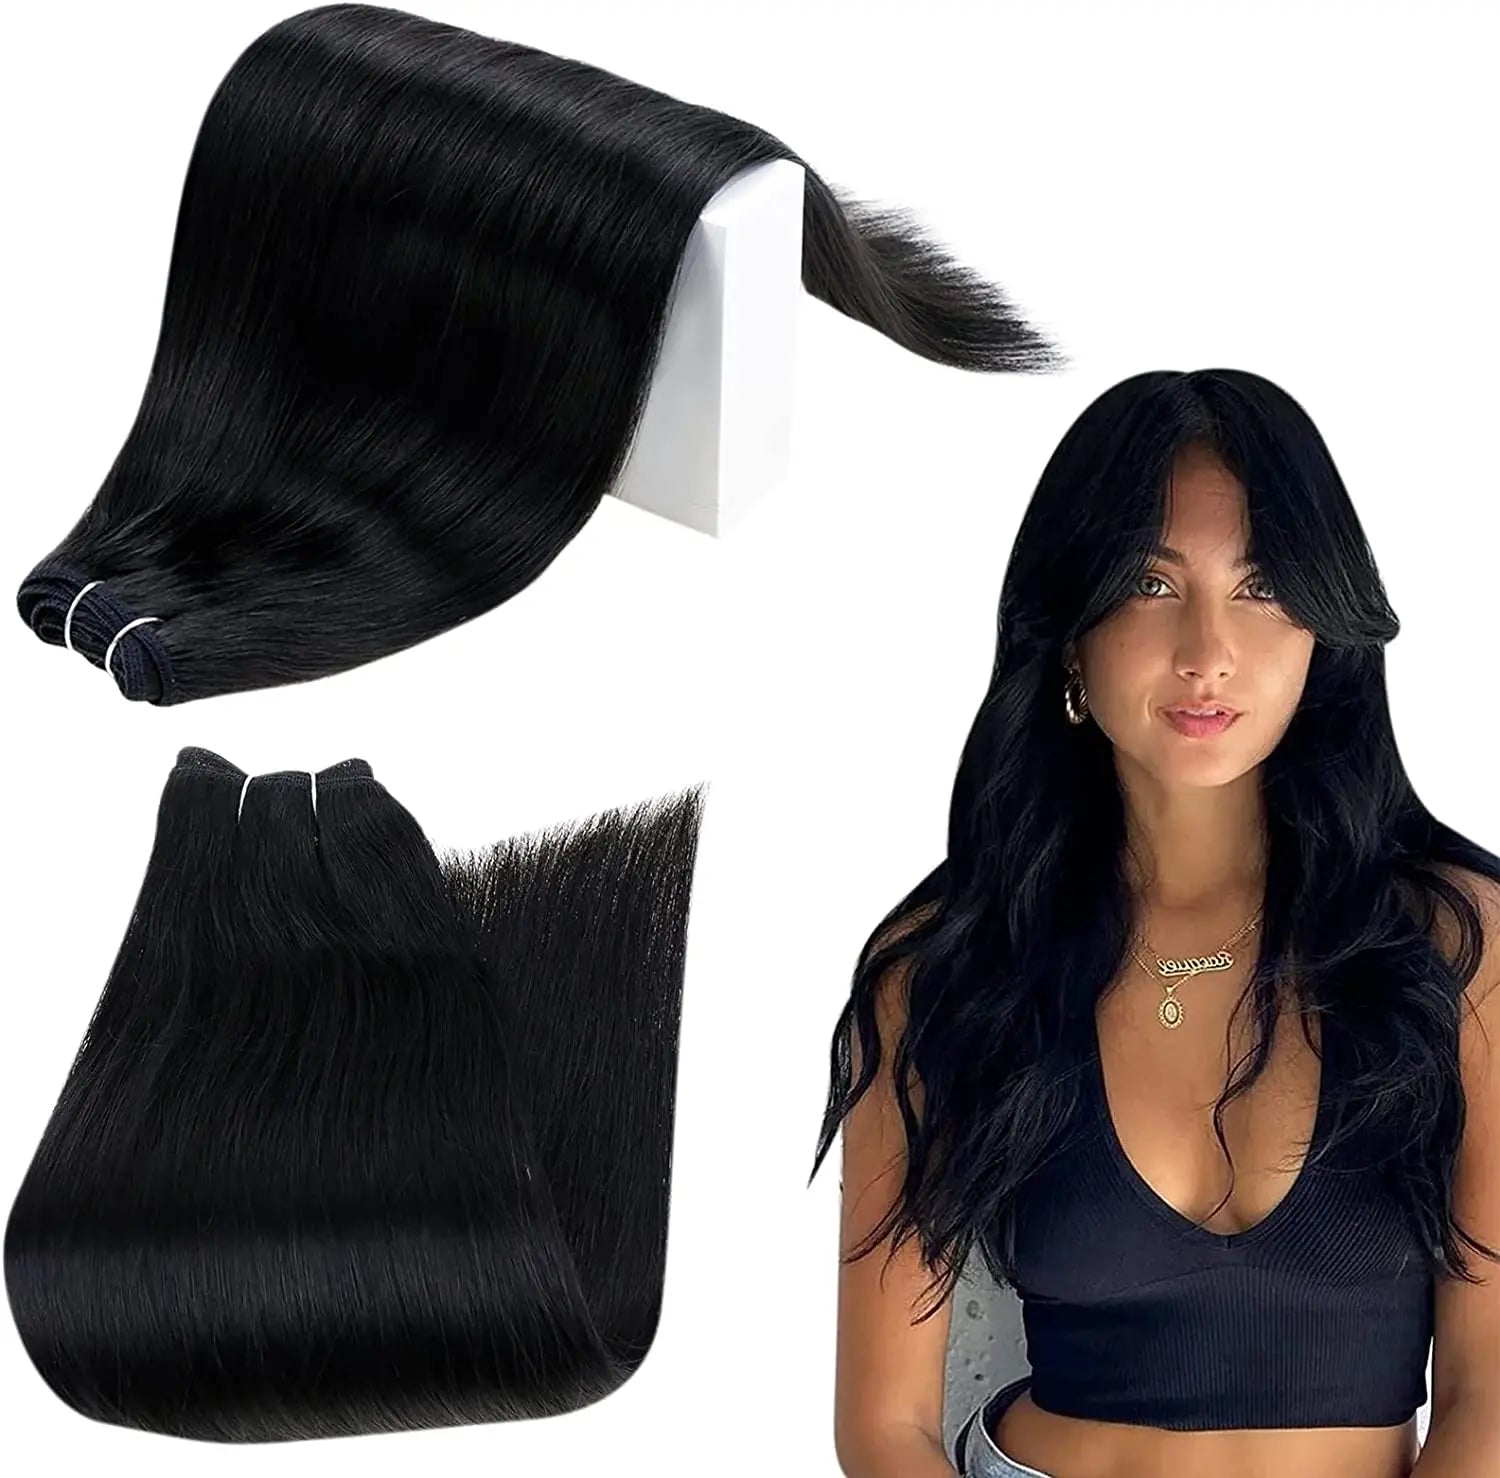 Jet Black Remy Human Hair Weft/Weave Extensions - 100g - NZAZU